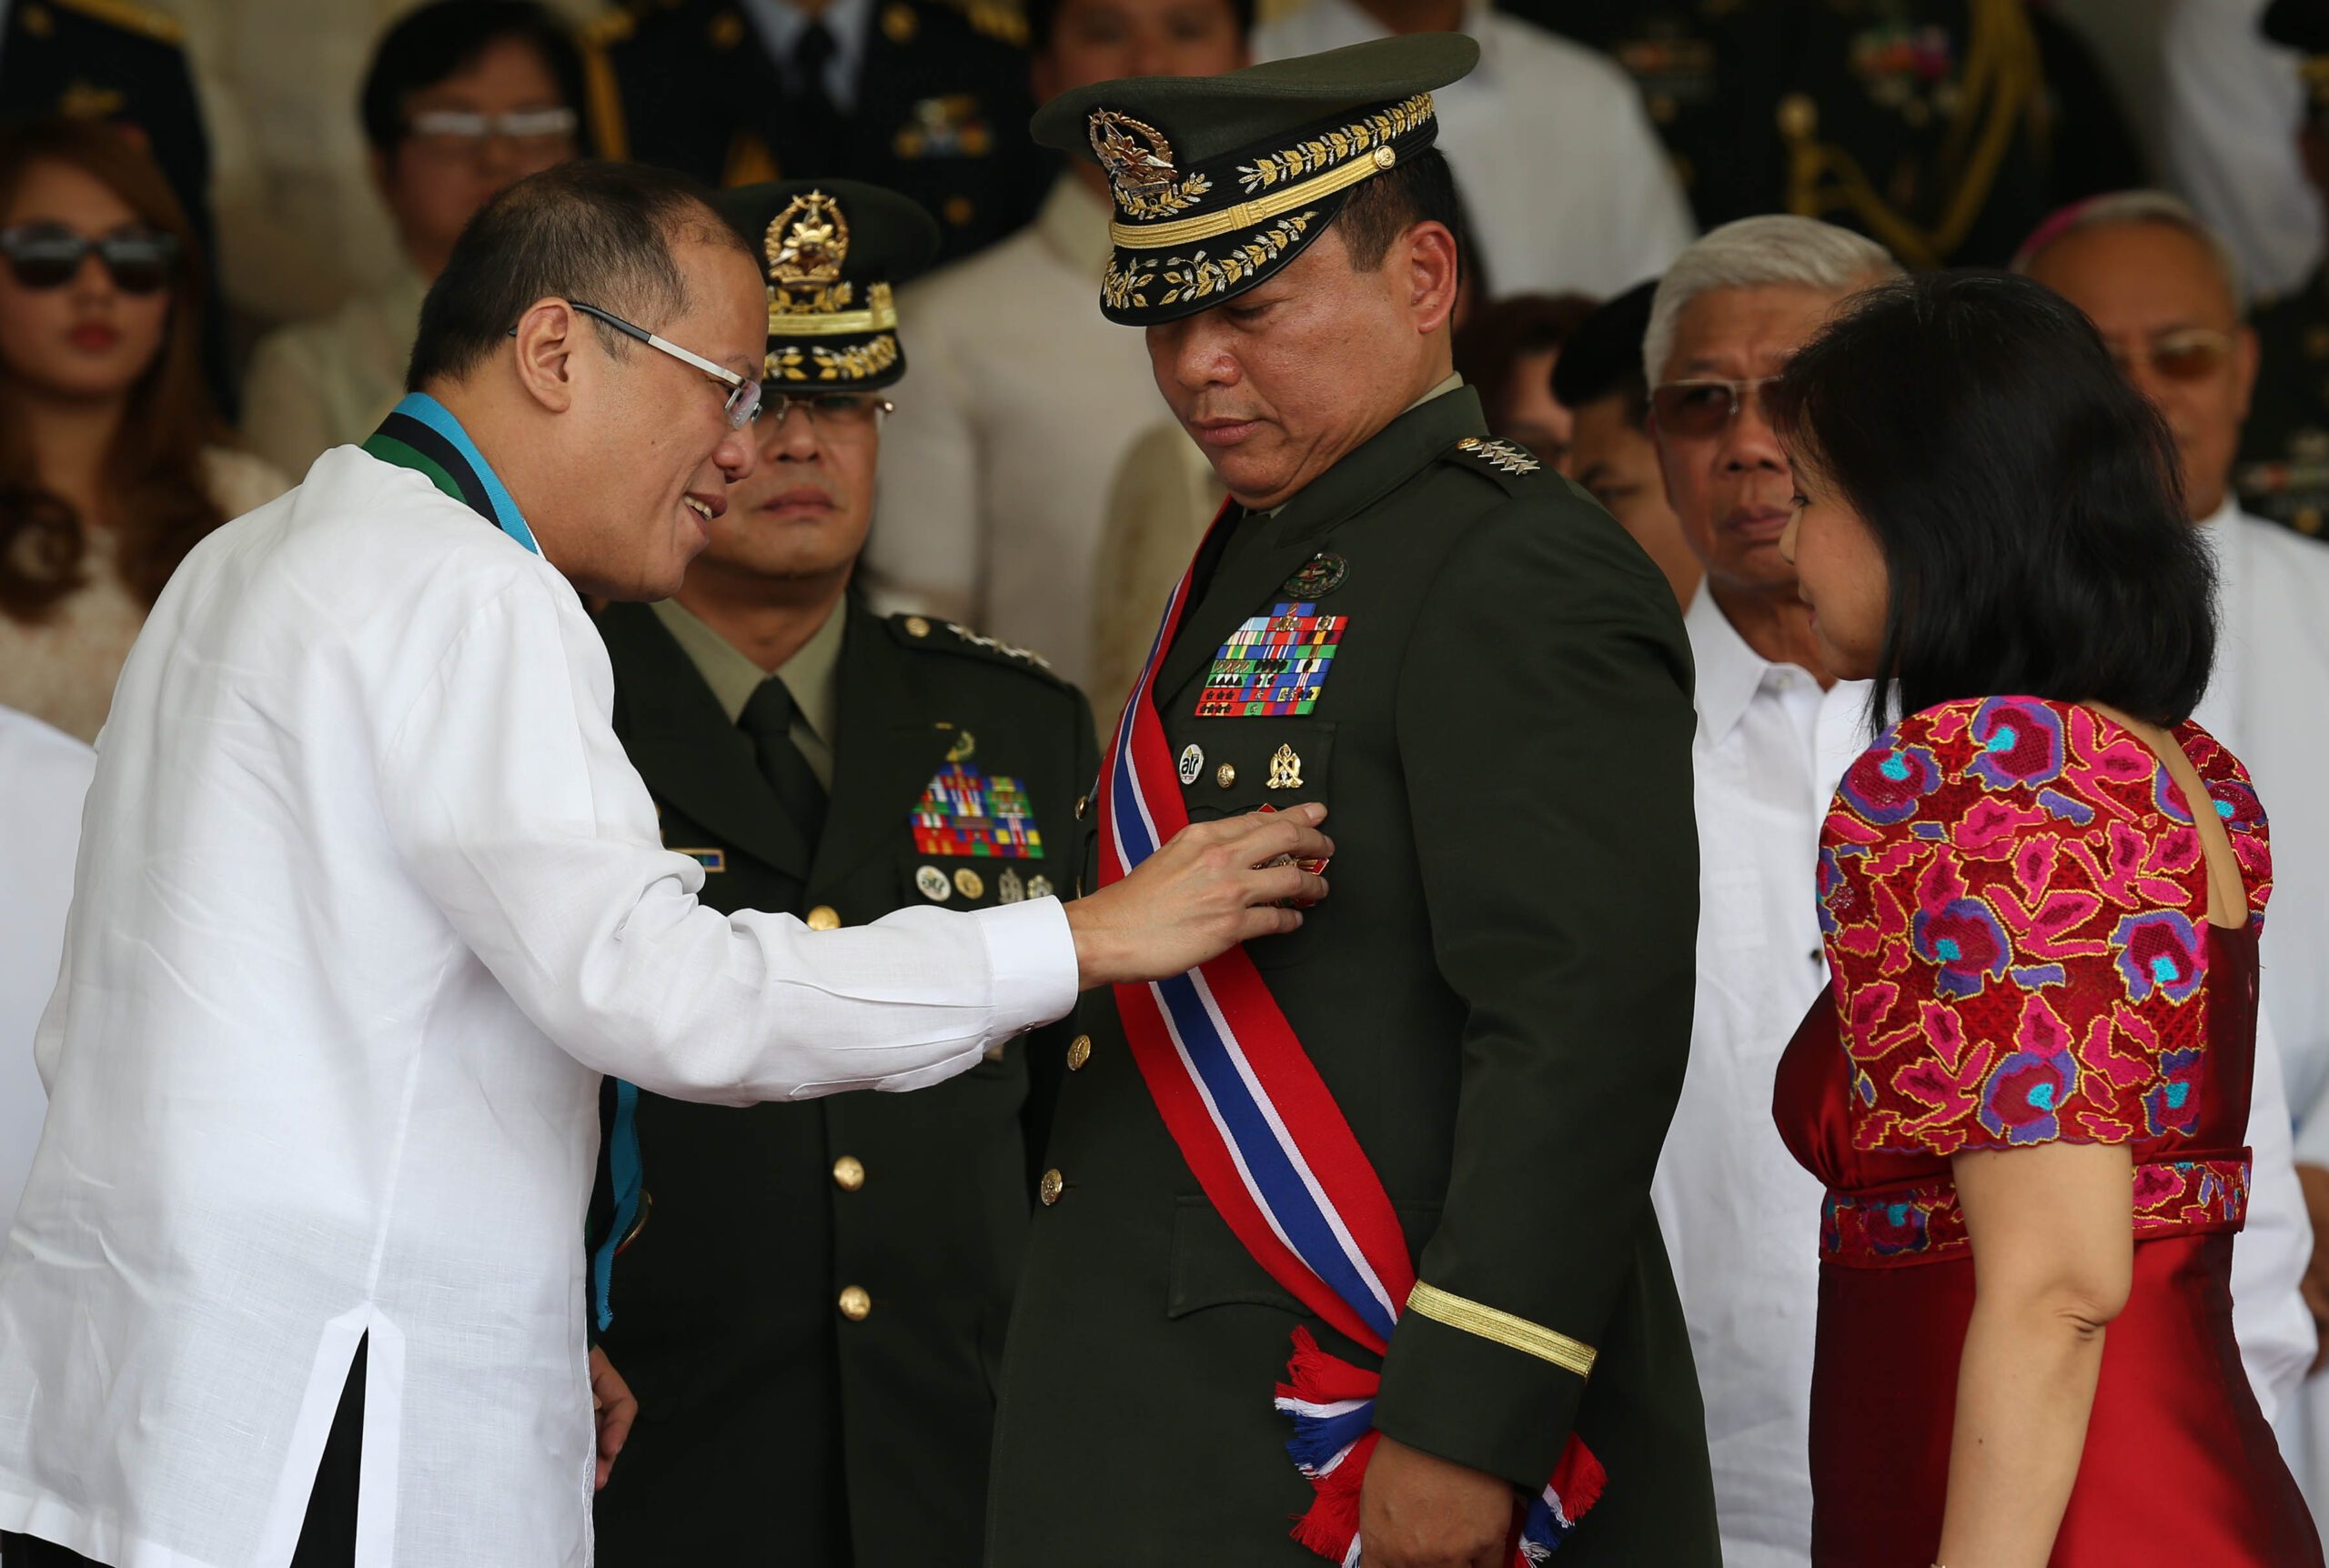 Aquino general’s ‘informal visit’ to Joma sparked hope for talks under Marcos Jr.